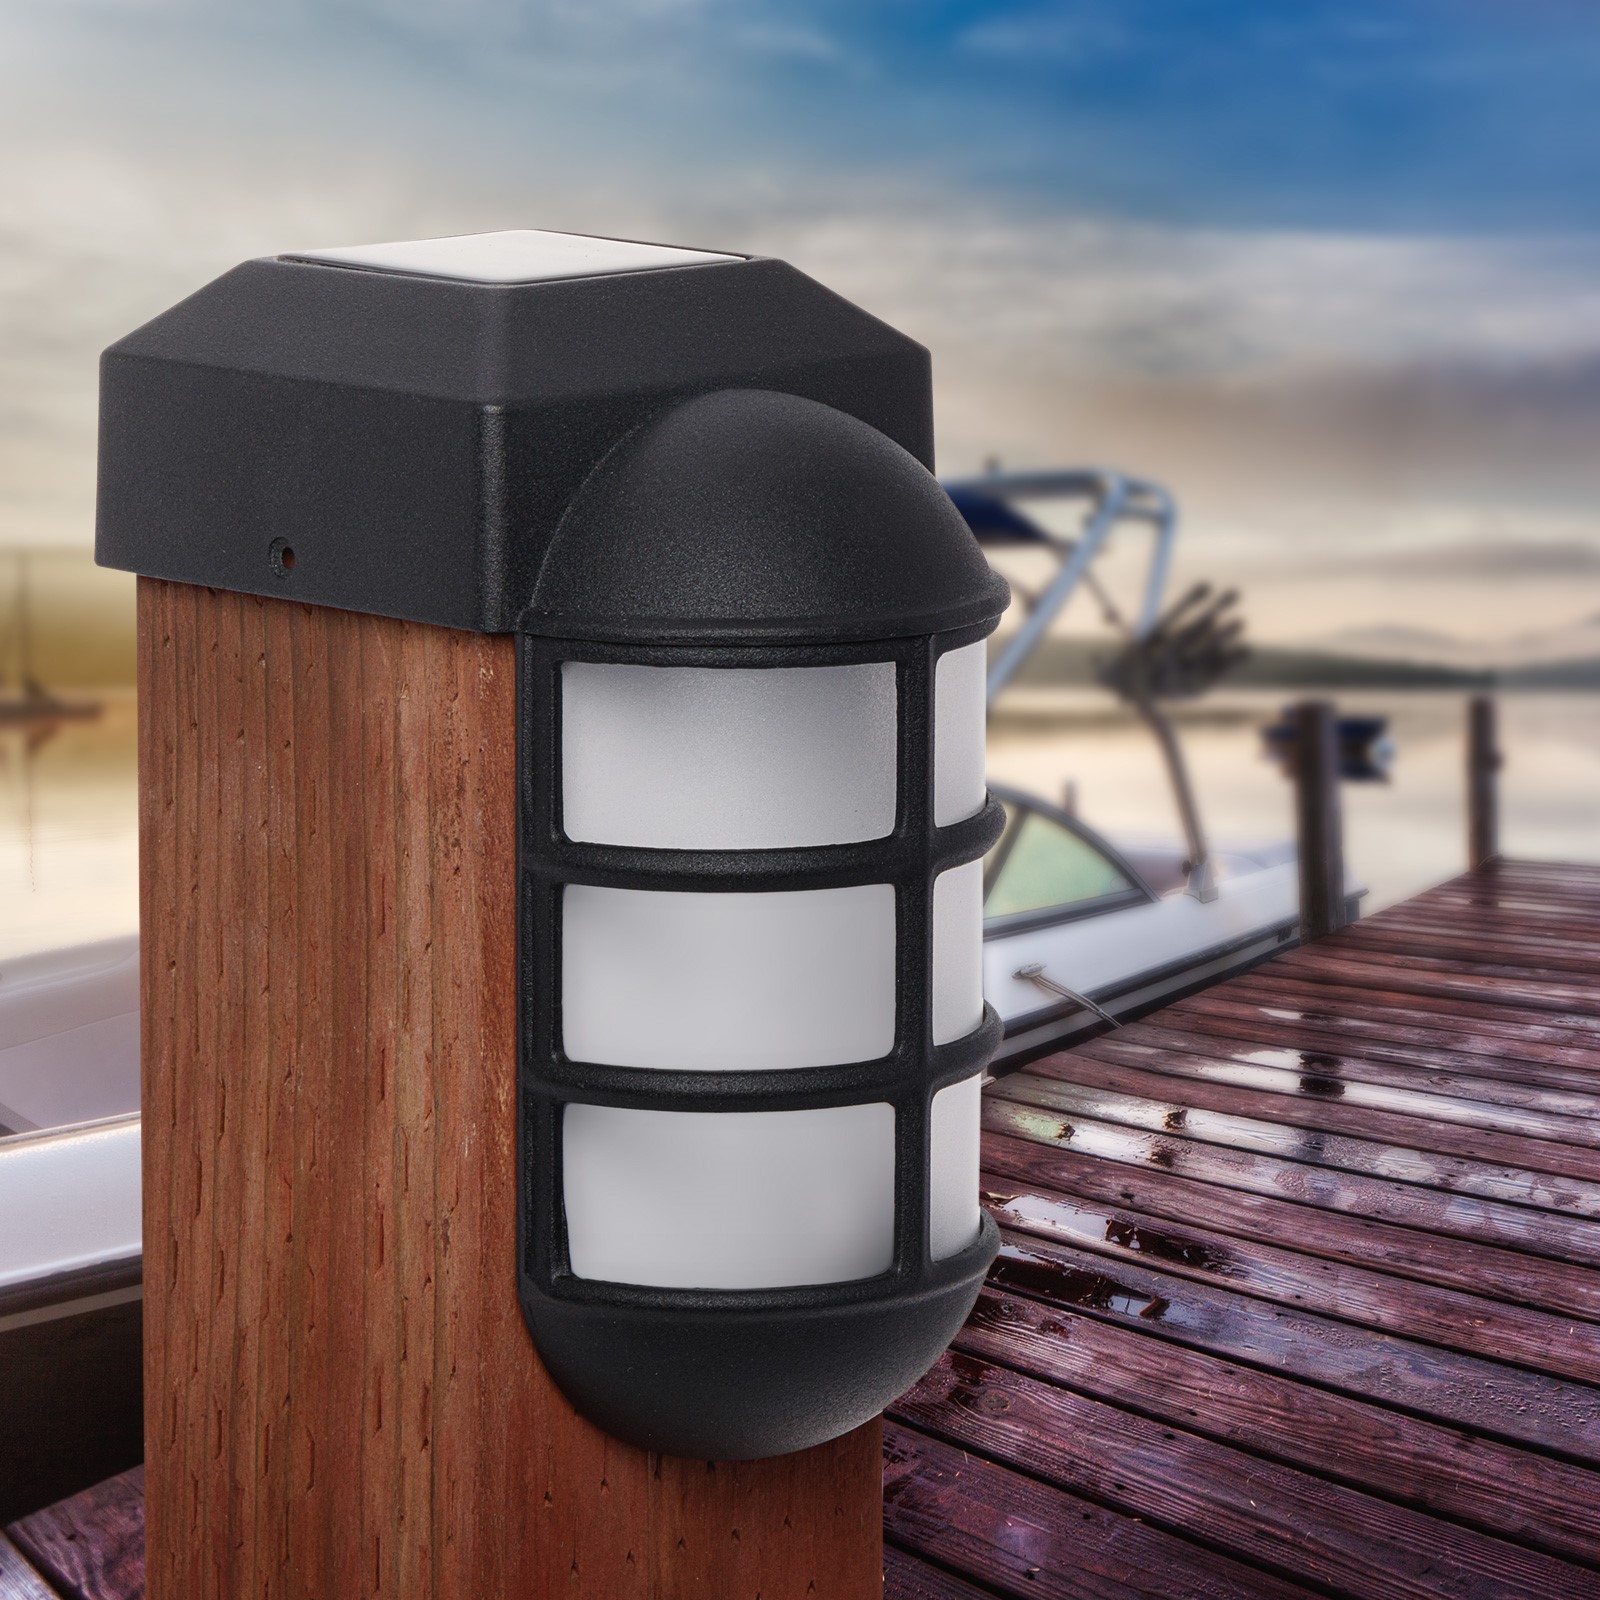 GreenLighting Pack Marina Solar Post Cap Lights Metal Side Mount Dock  Light for 4x4 Wood Posts